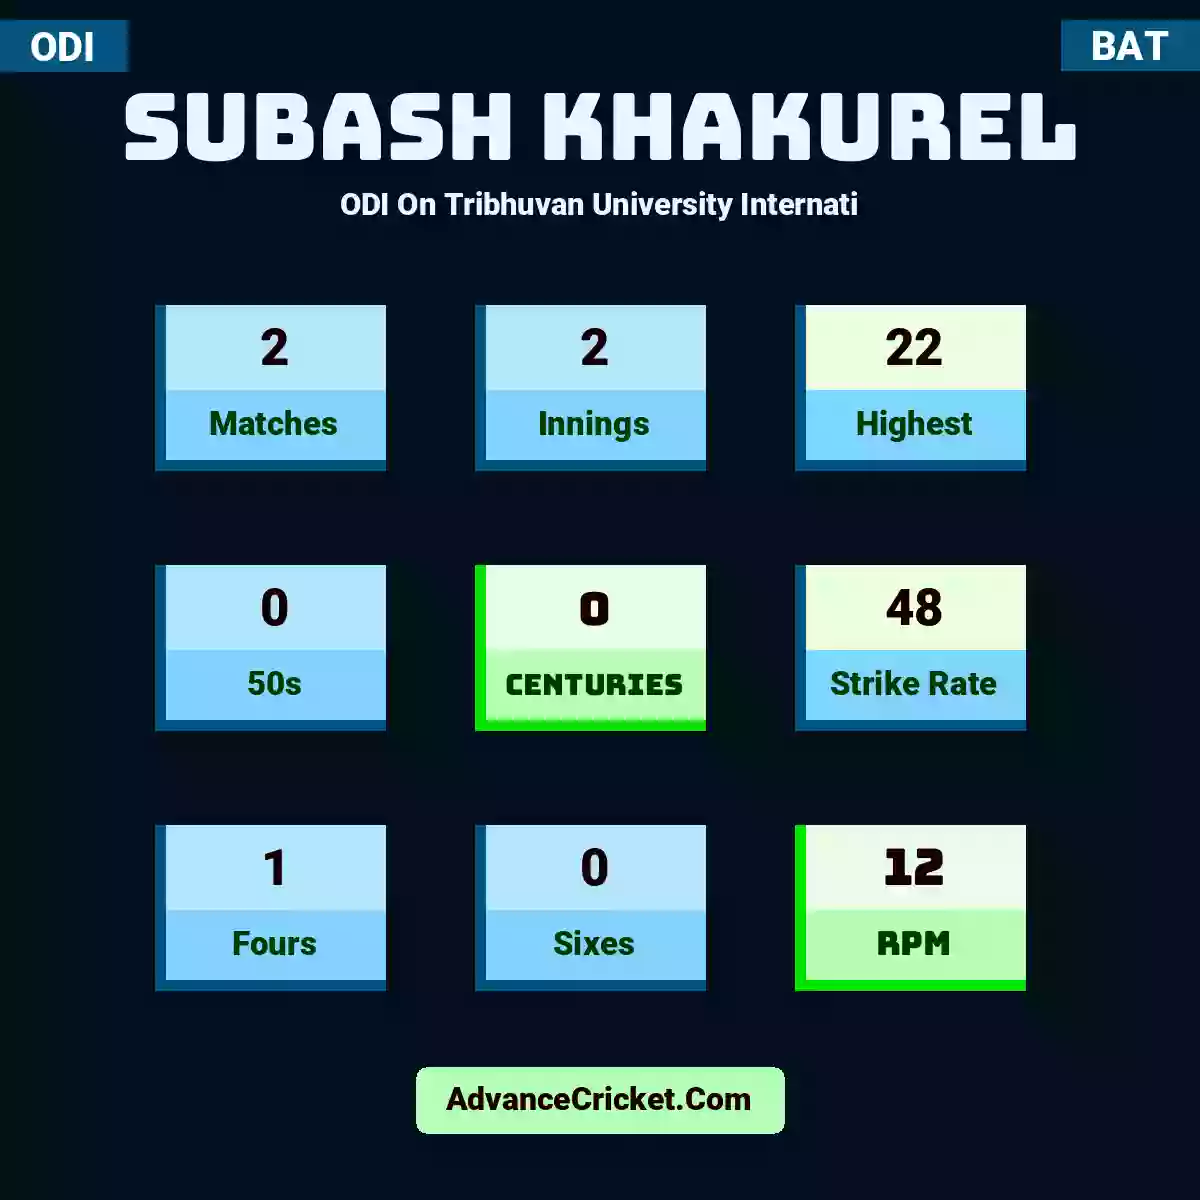 Subash Khakurel ODI  On Tribhuvan University Internati, Subash Khakurel played 2 matches, scored 22 runs as highest, 0 half-centuries, and 0 centuries, with a strike rate of 48. S.Khakurel hit 1 fours and 0 sixes, with an RPM of 12.